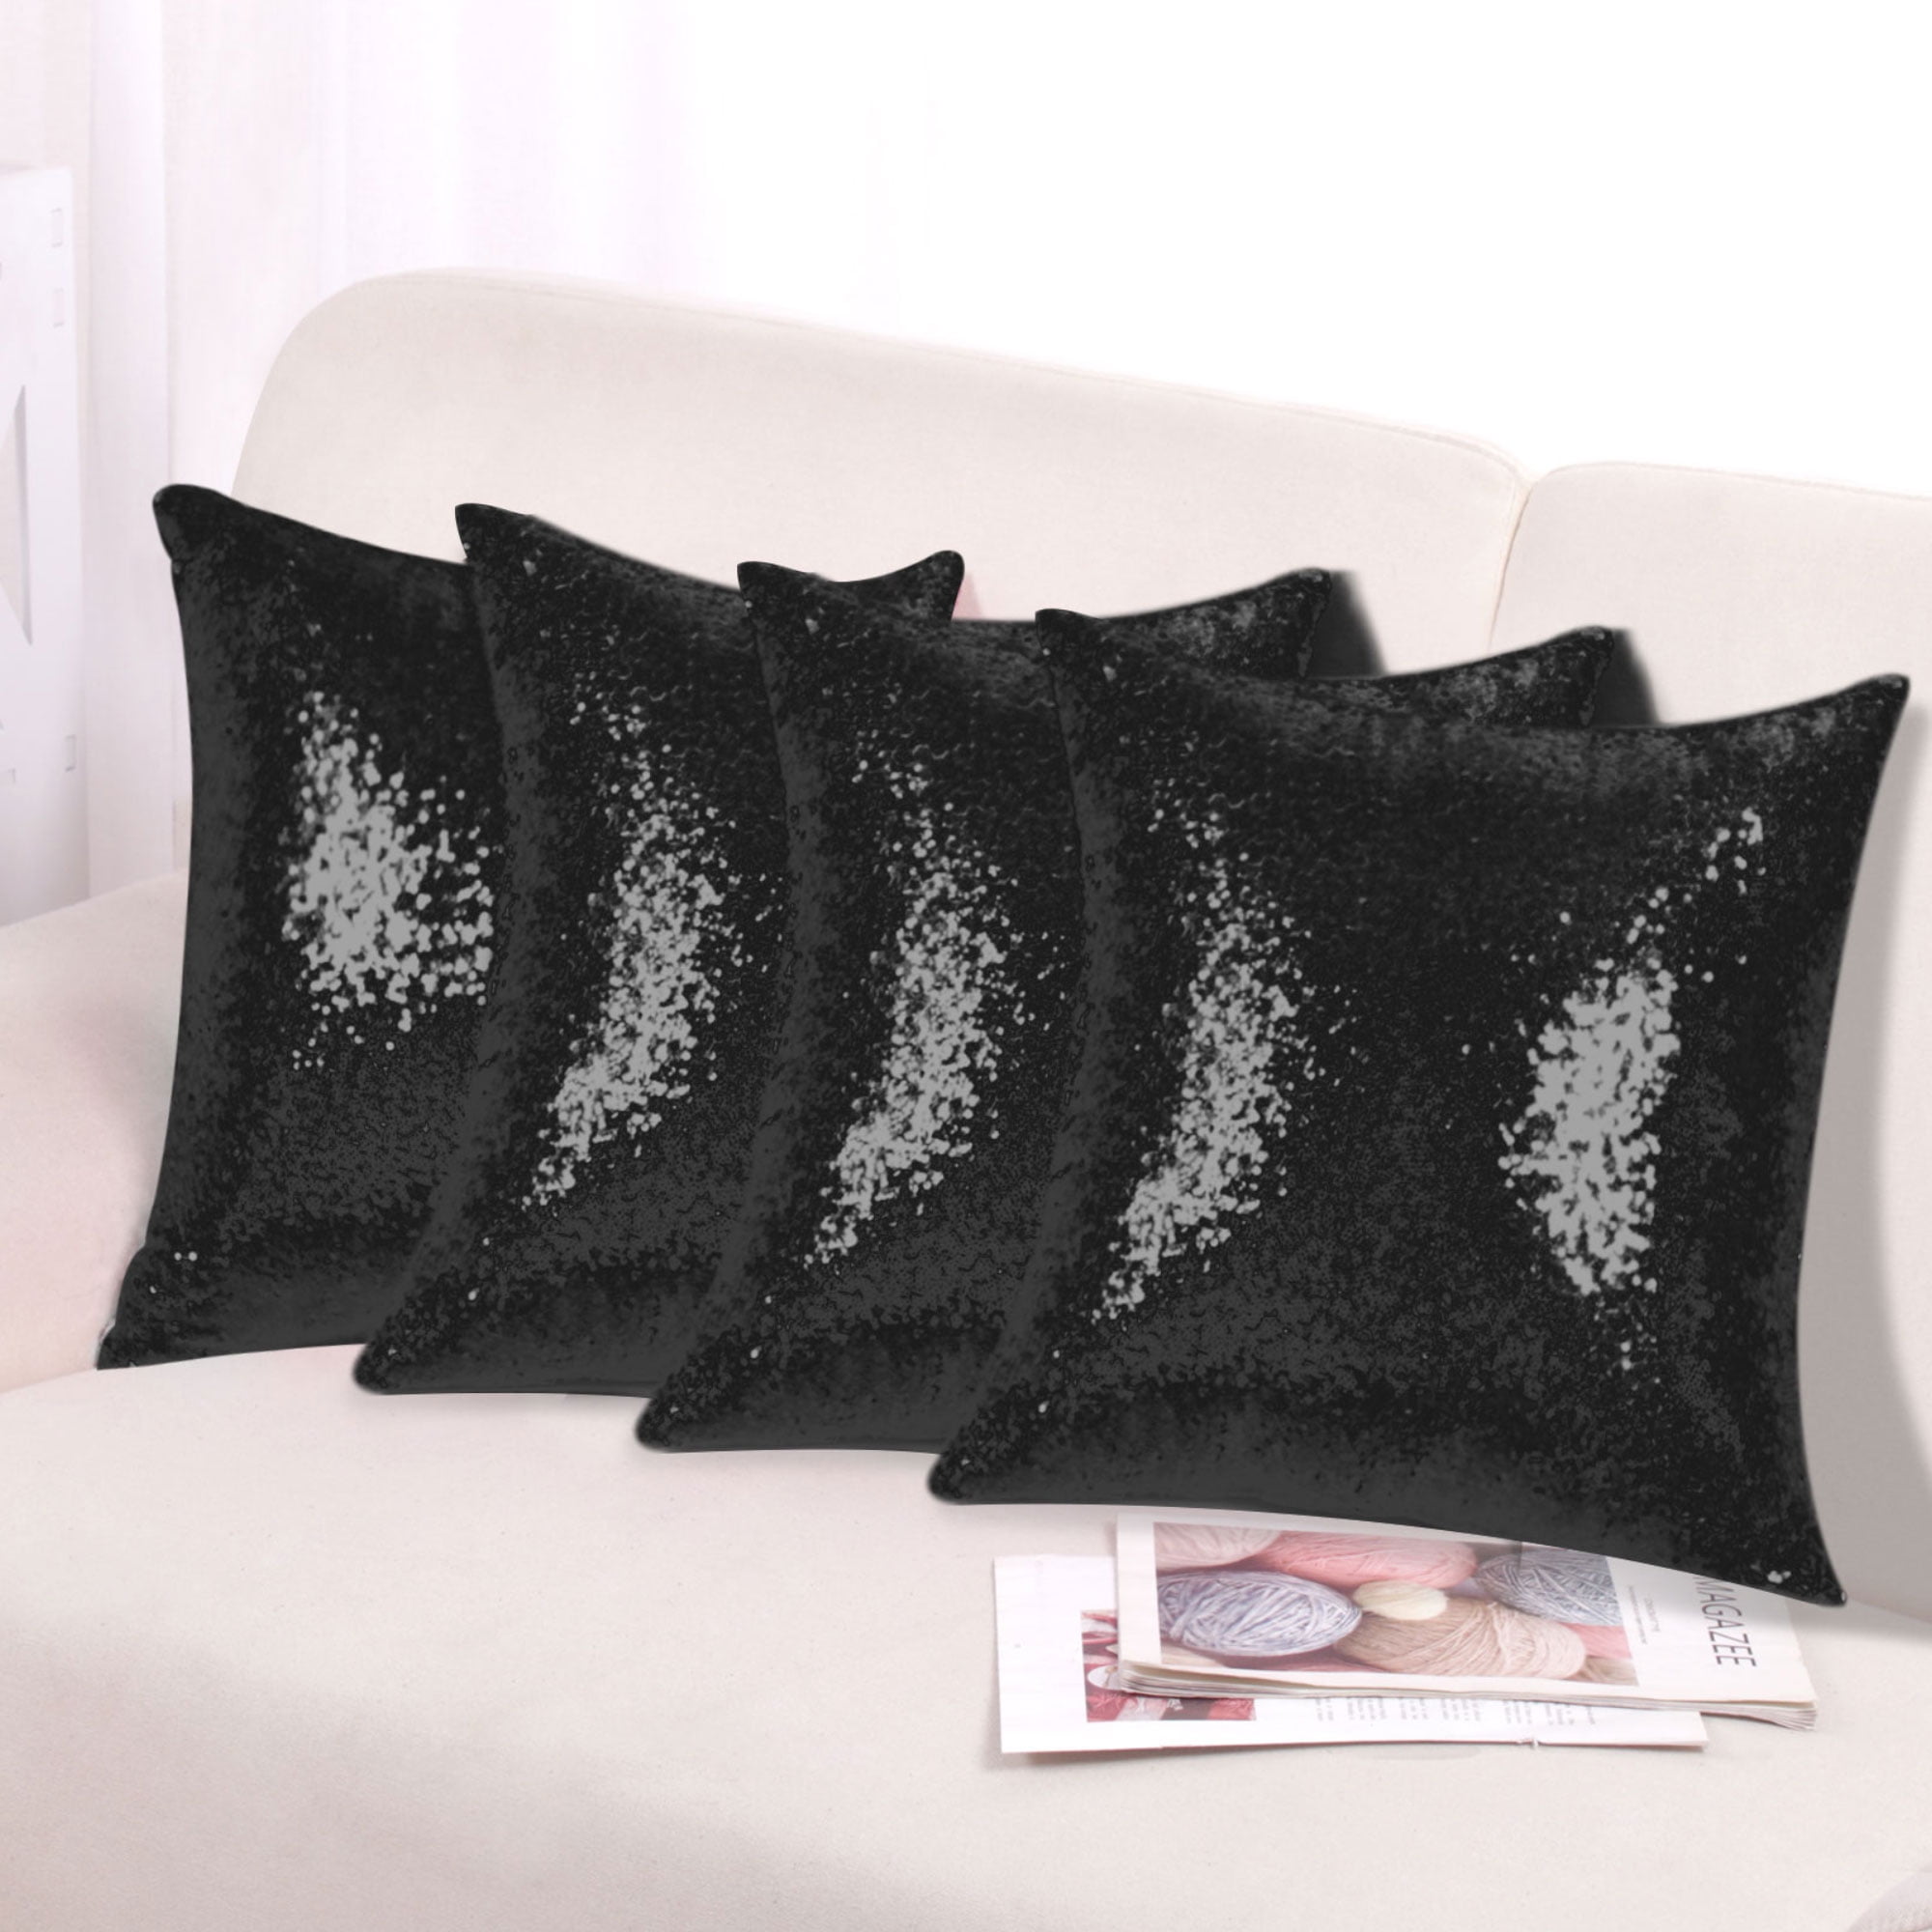 Crushed Velvet Cushion Covers Luxury Glam Plain Cushions Covers 18" x 18" 